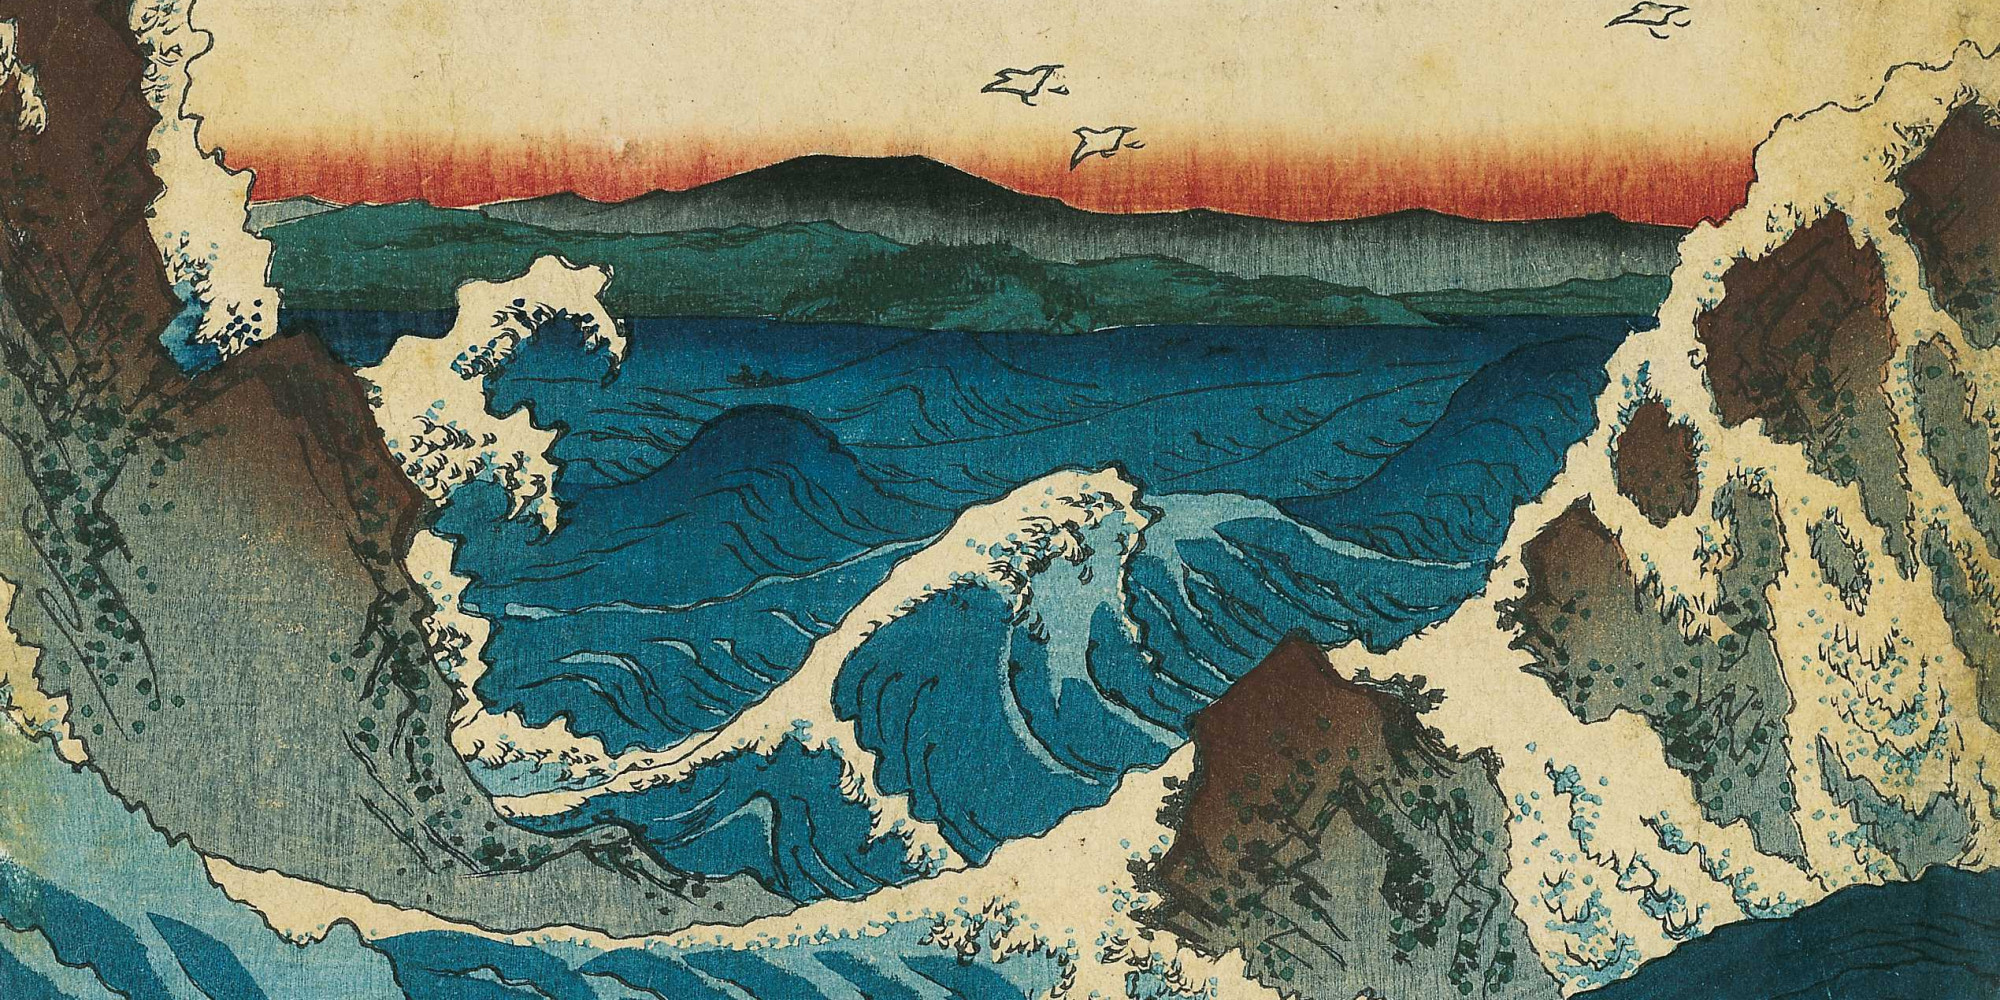 Estampes japonaises, images du monde flottant